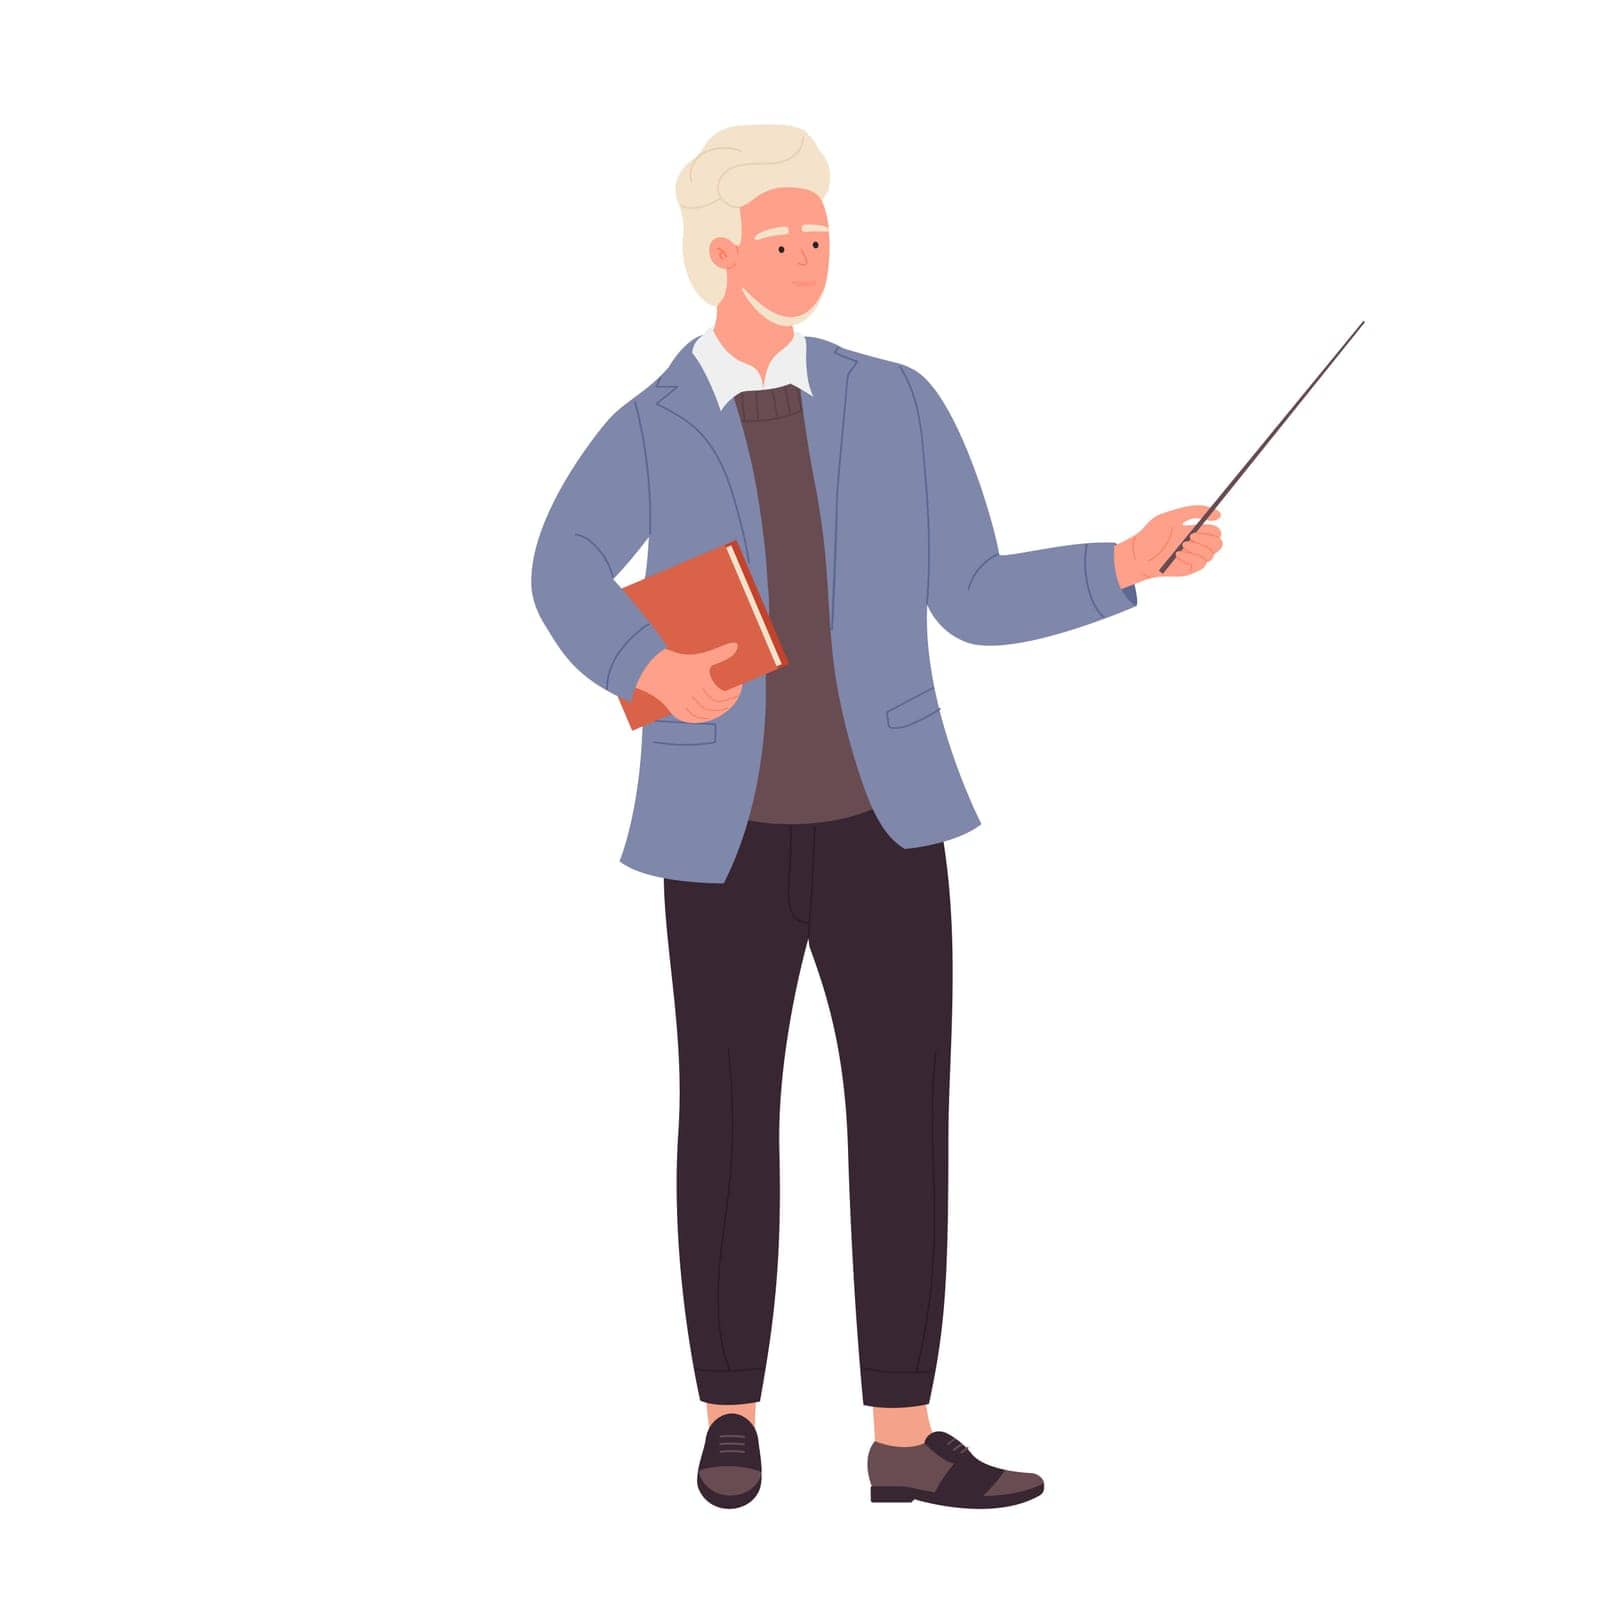 Teacher man holding pointing stick by Popov